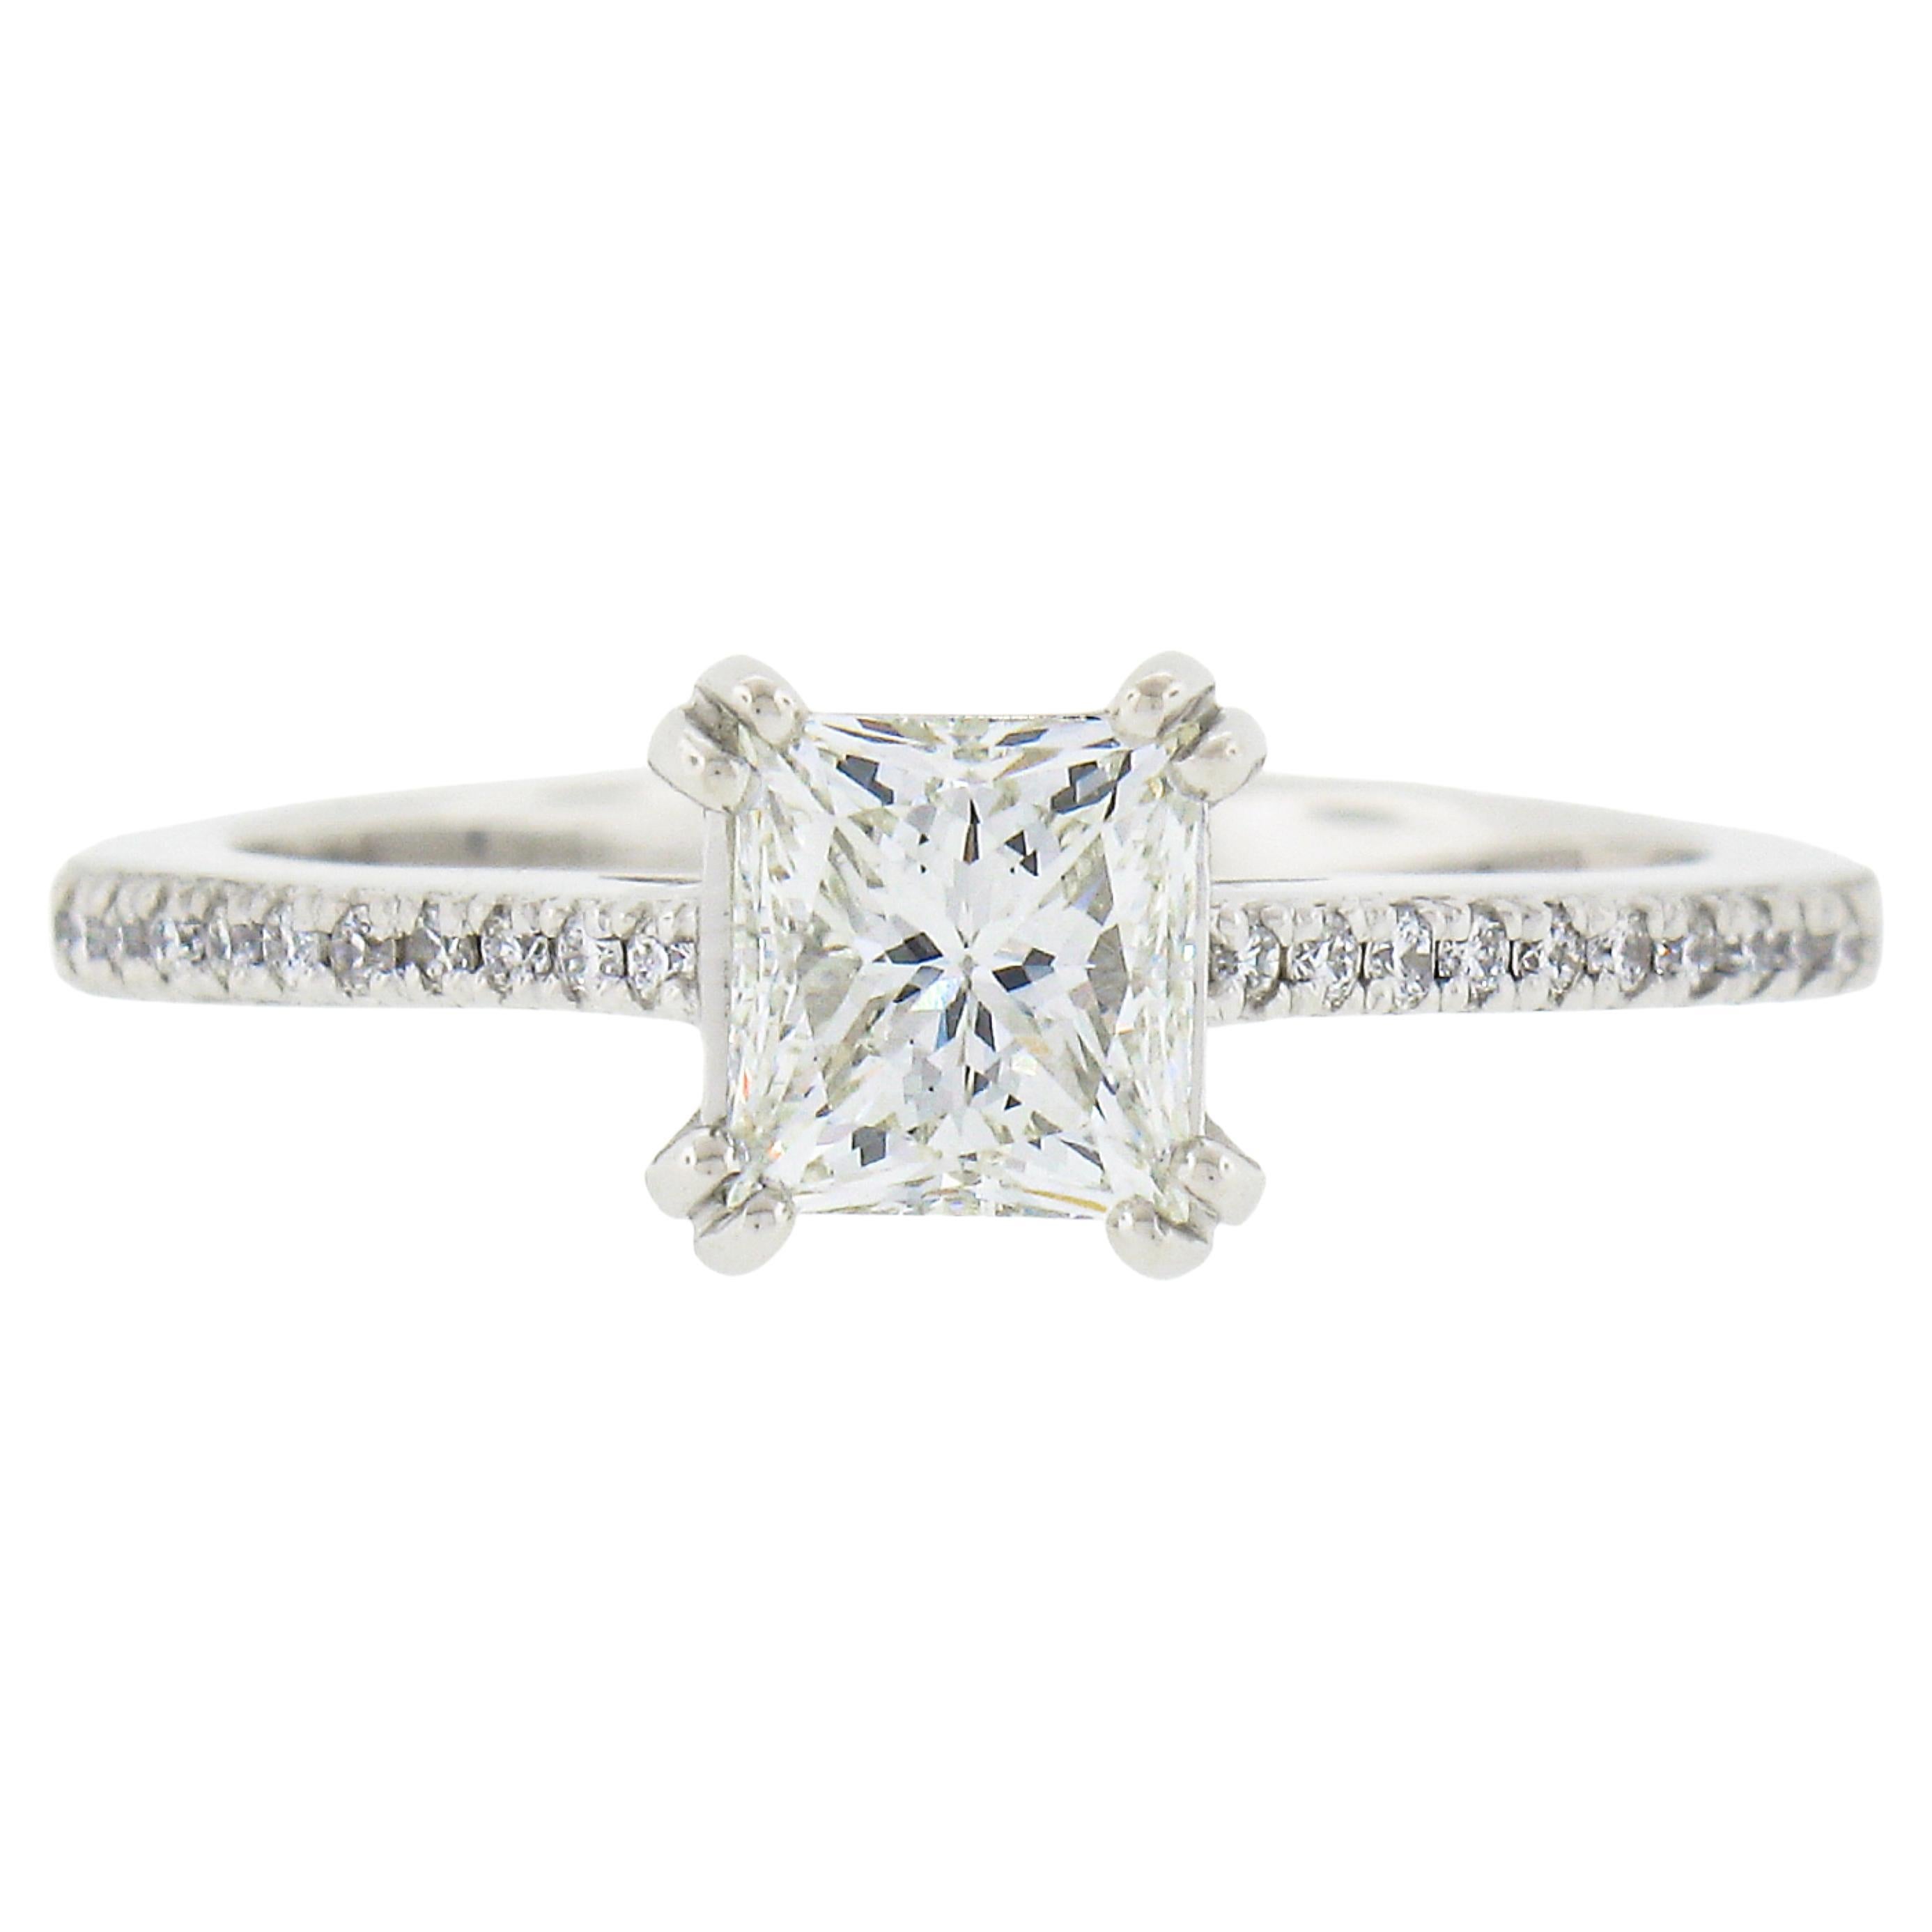 NEW 14k White Gold 1.12ctw GIA Princess Cut Diamond Solitaire Engagement Ring en vente